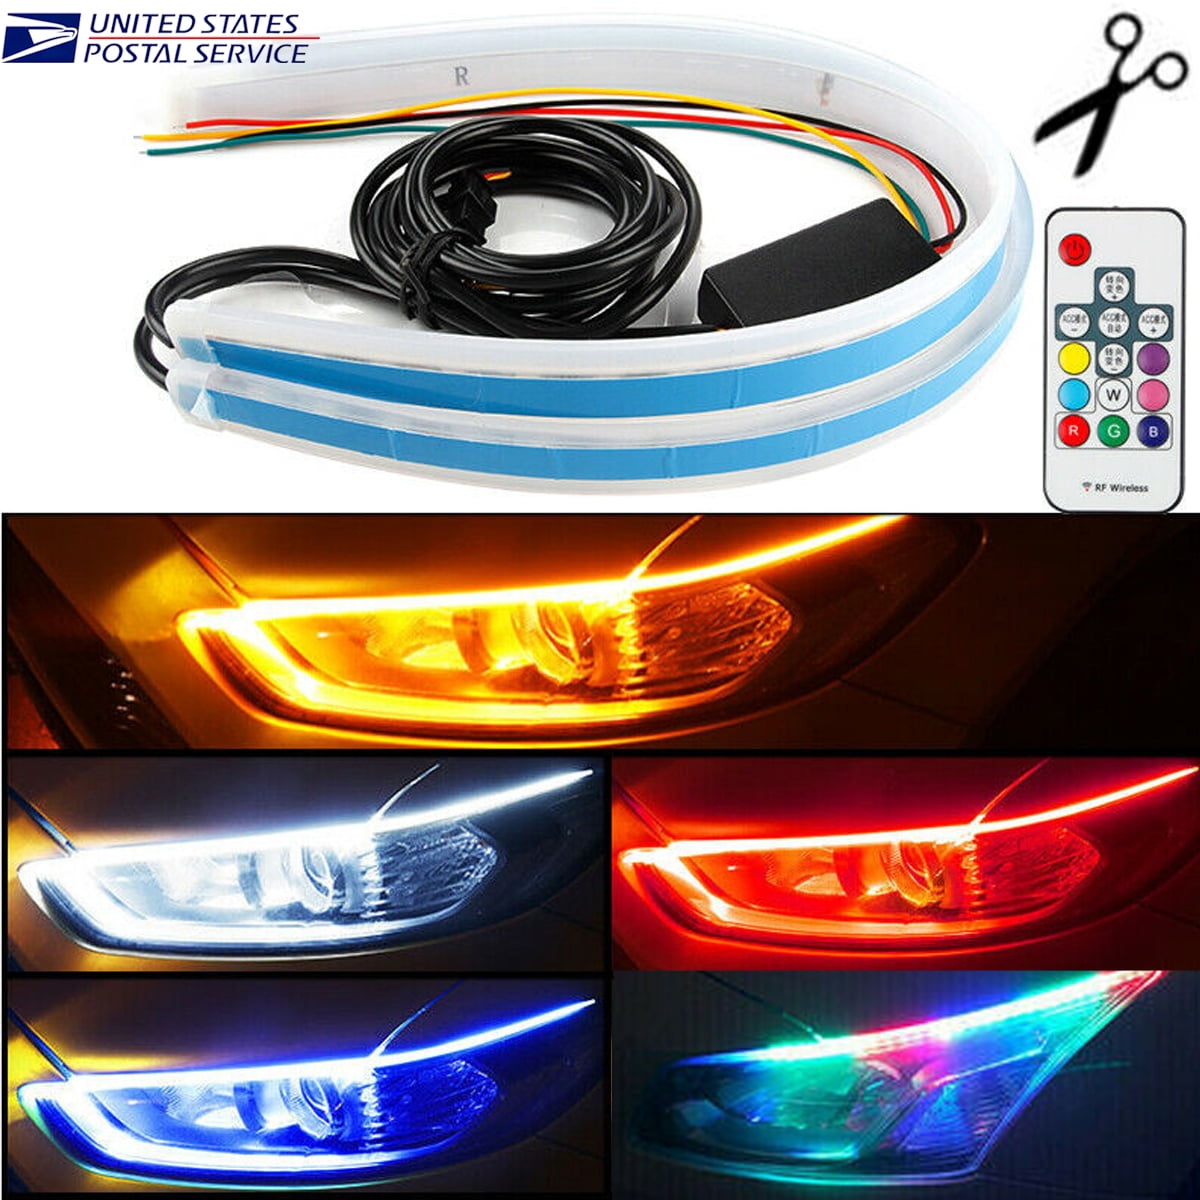 2× LED Car Styling Daytime Running Light For Headlight Accessories - Walmart.com